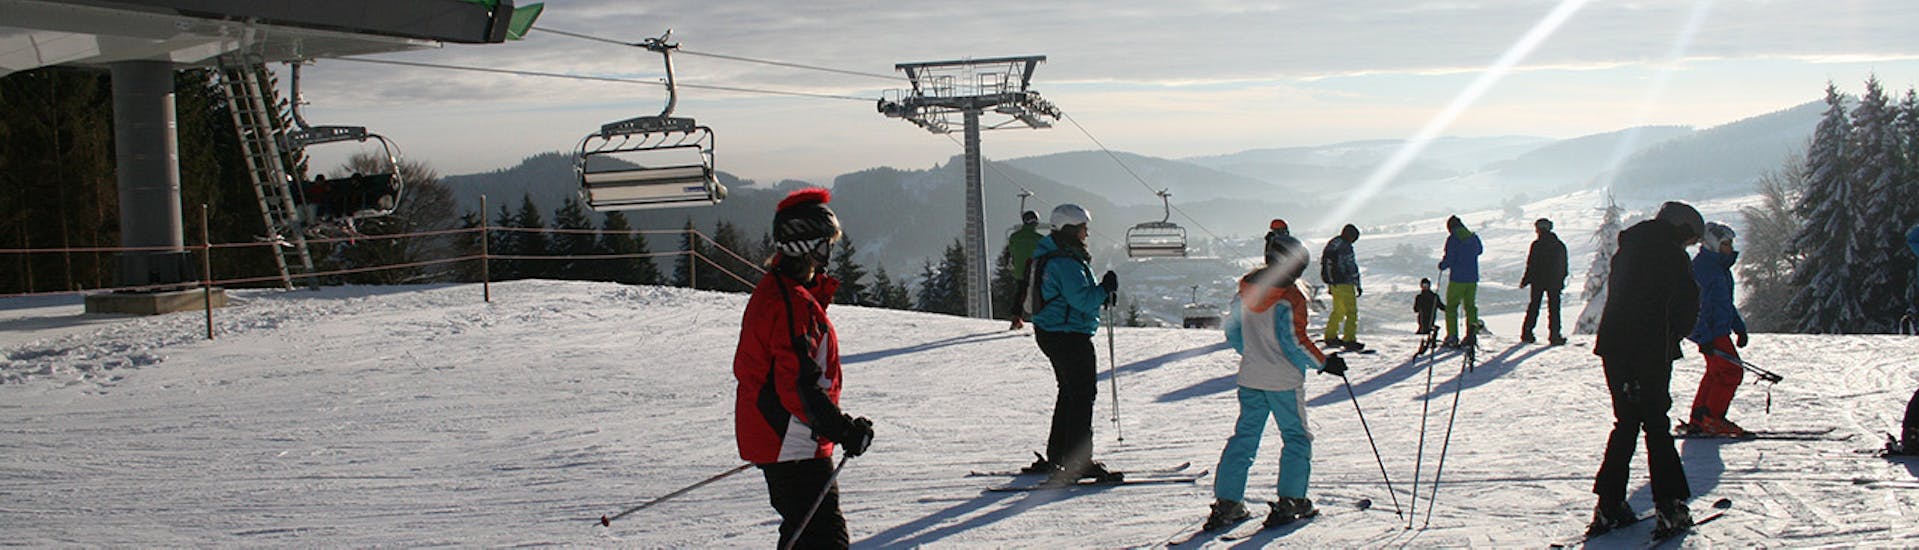 Clases de esquí para adultos a partir de 17 años para principiantes.